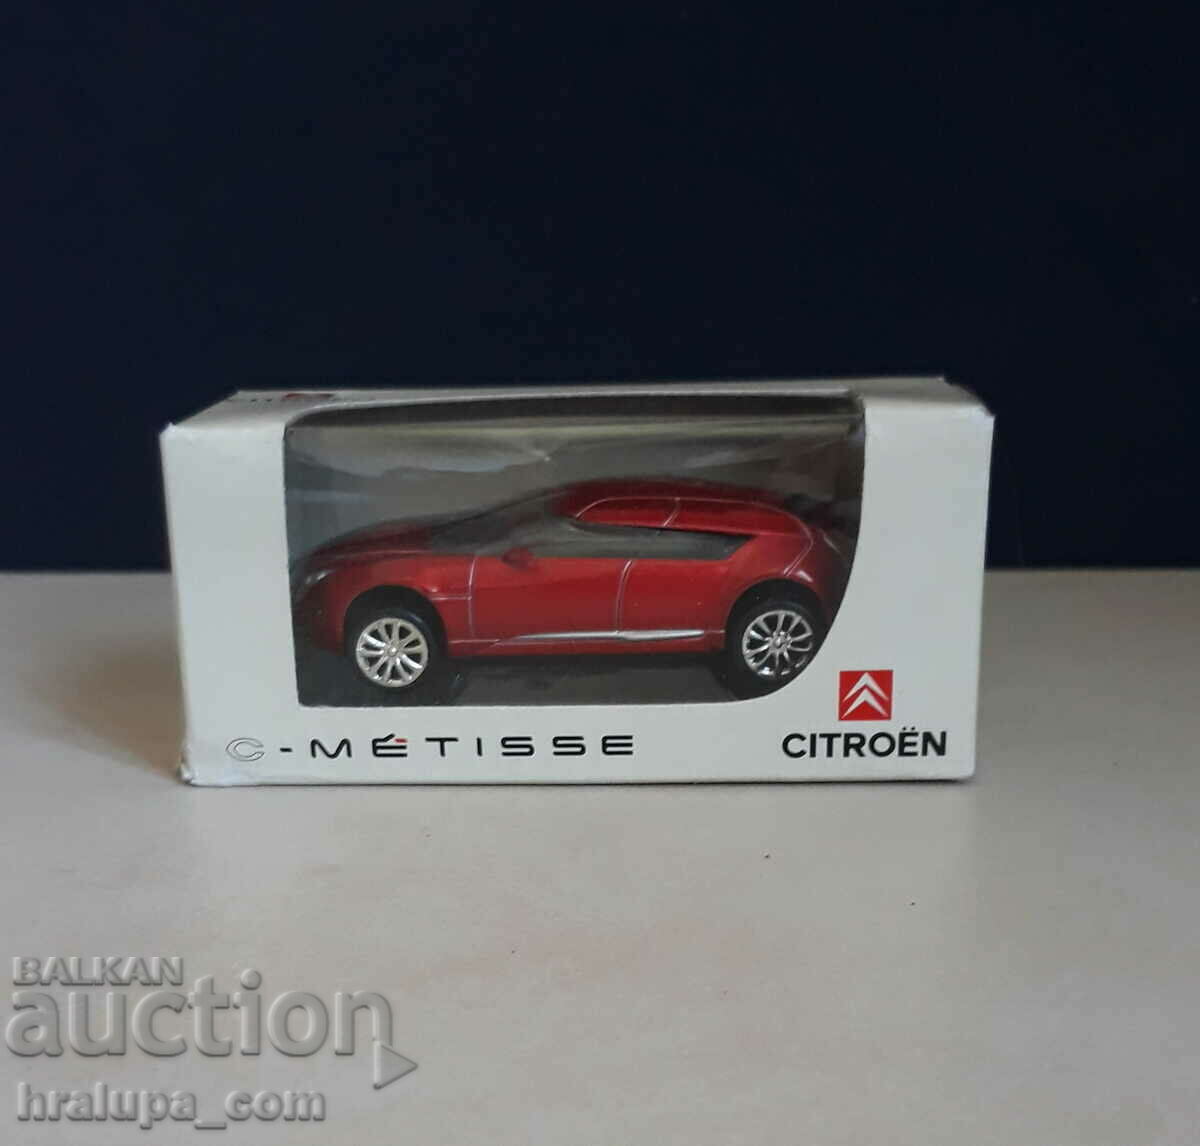 Метална количка Norev Citroen C - Metisse нова с кутия